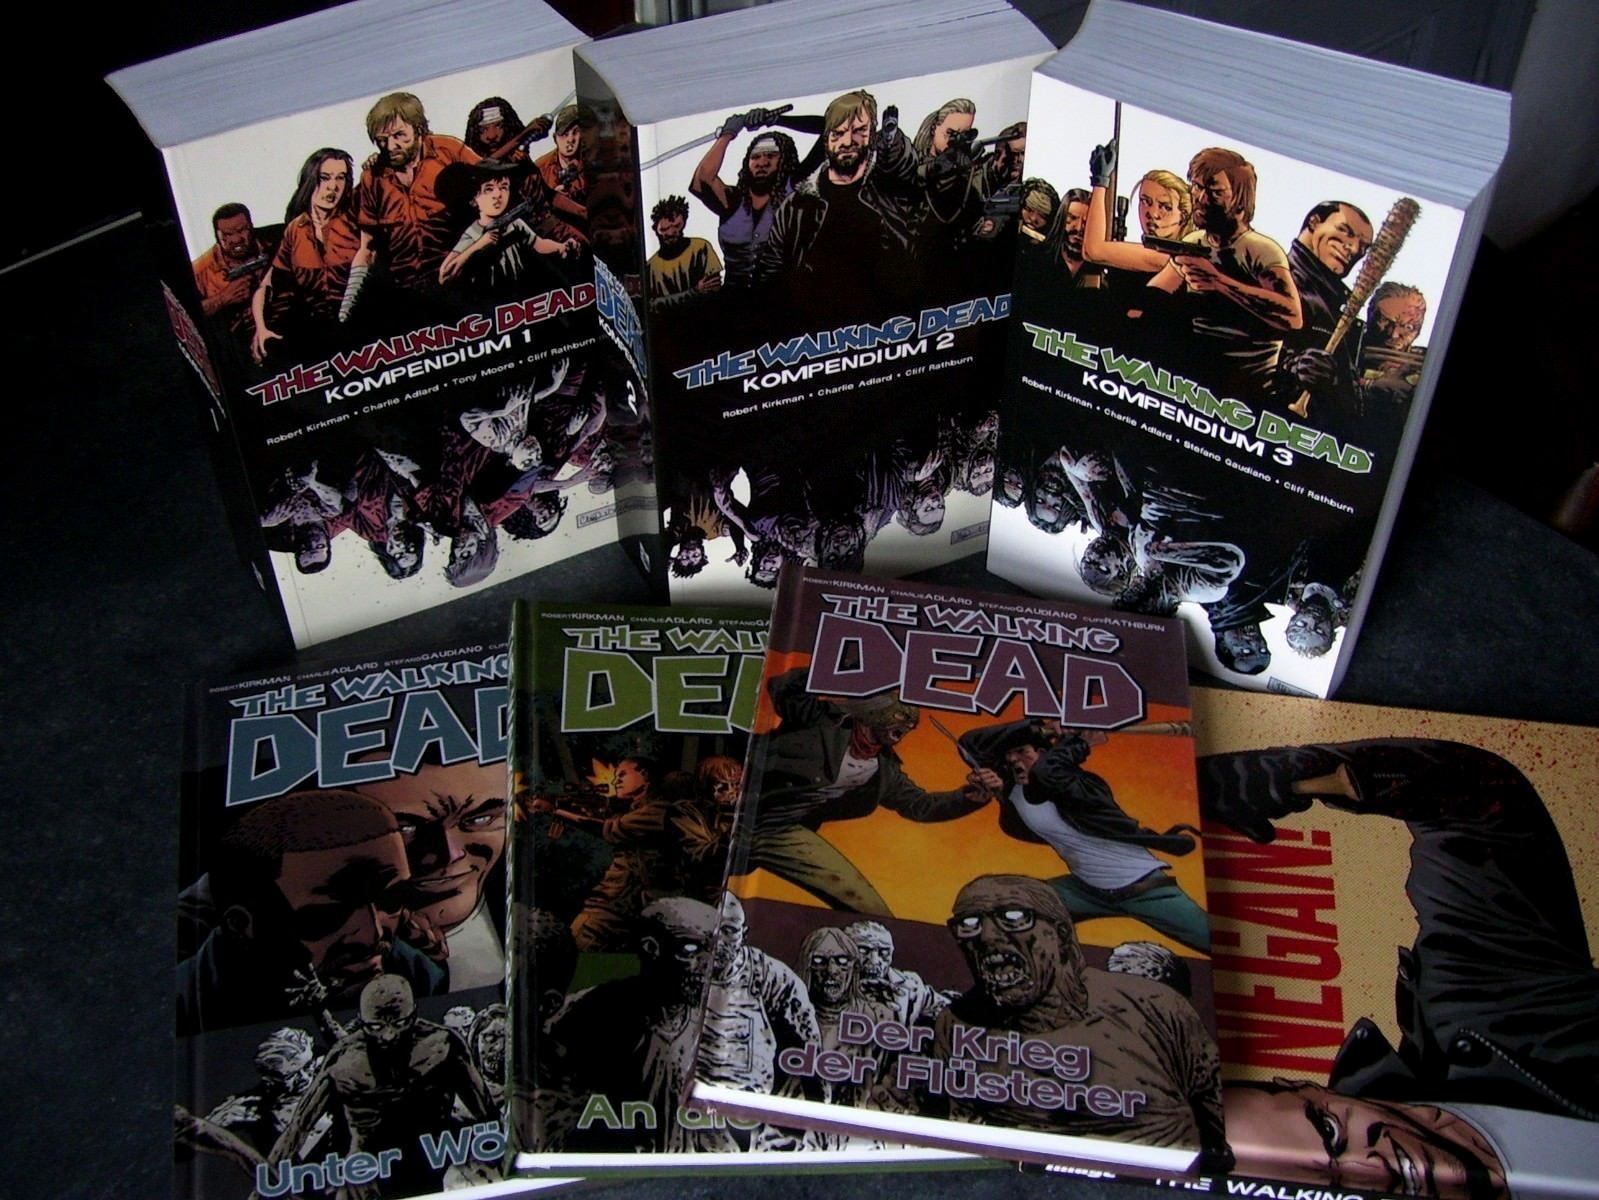 THE WALKING DEAD Comic-Kompendium 1 + 2 + 3 + Bd. 25, 26, 27 - deutsch! + Negan